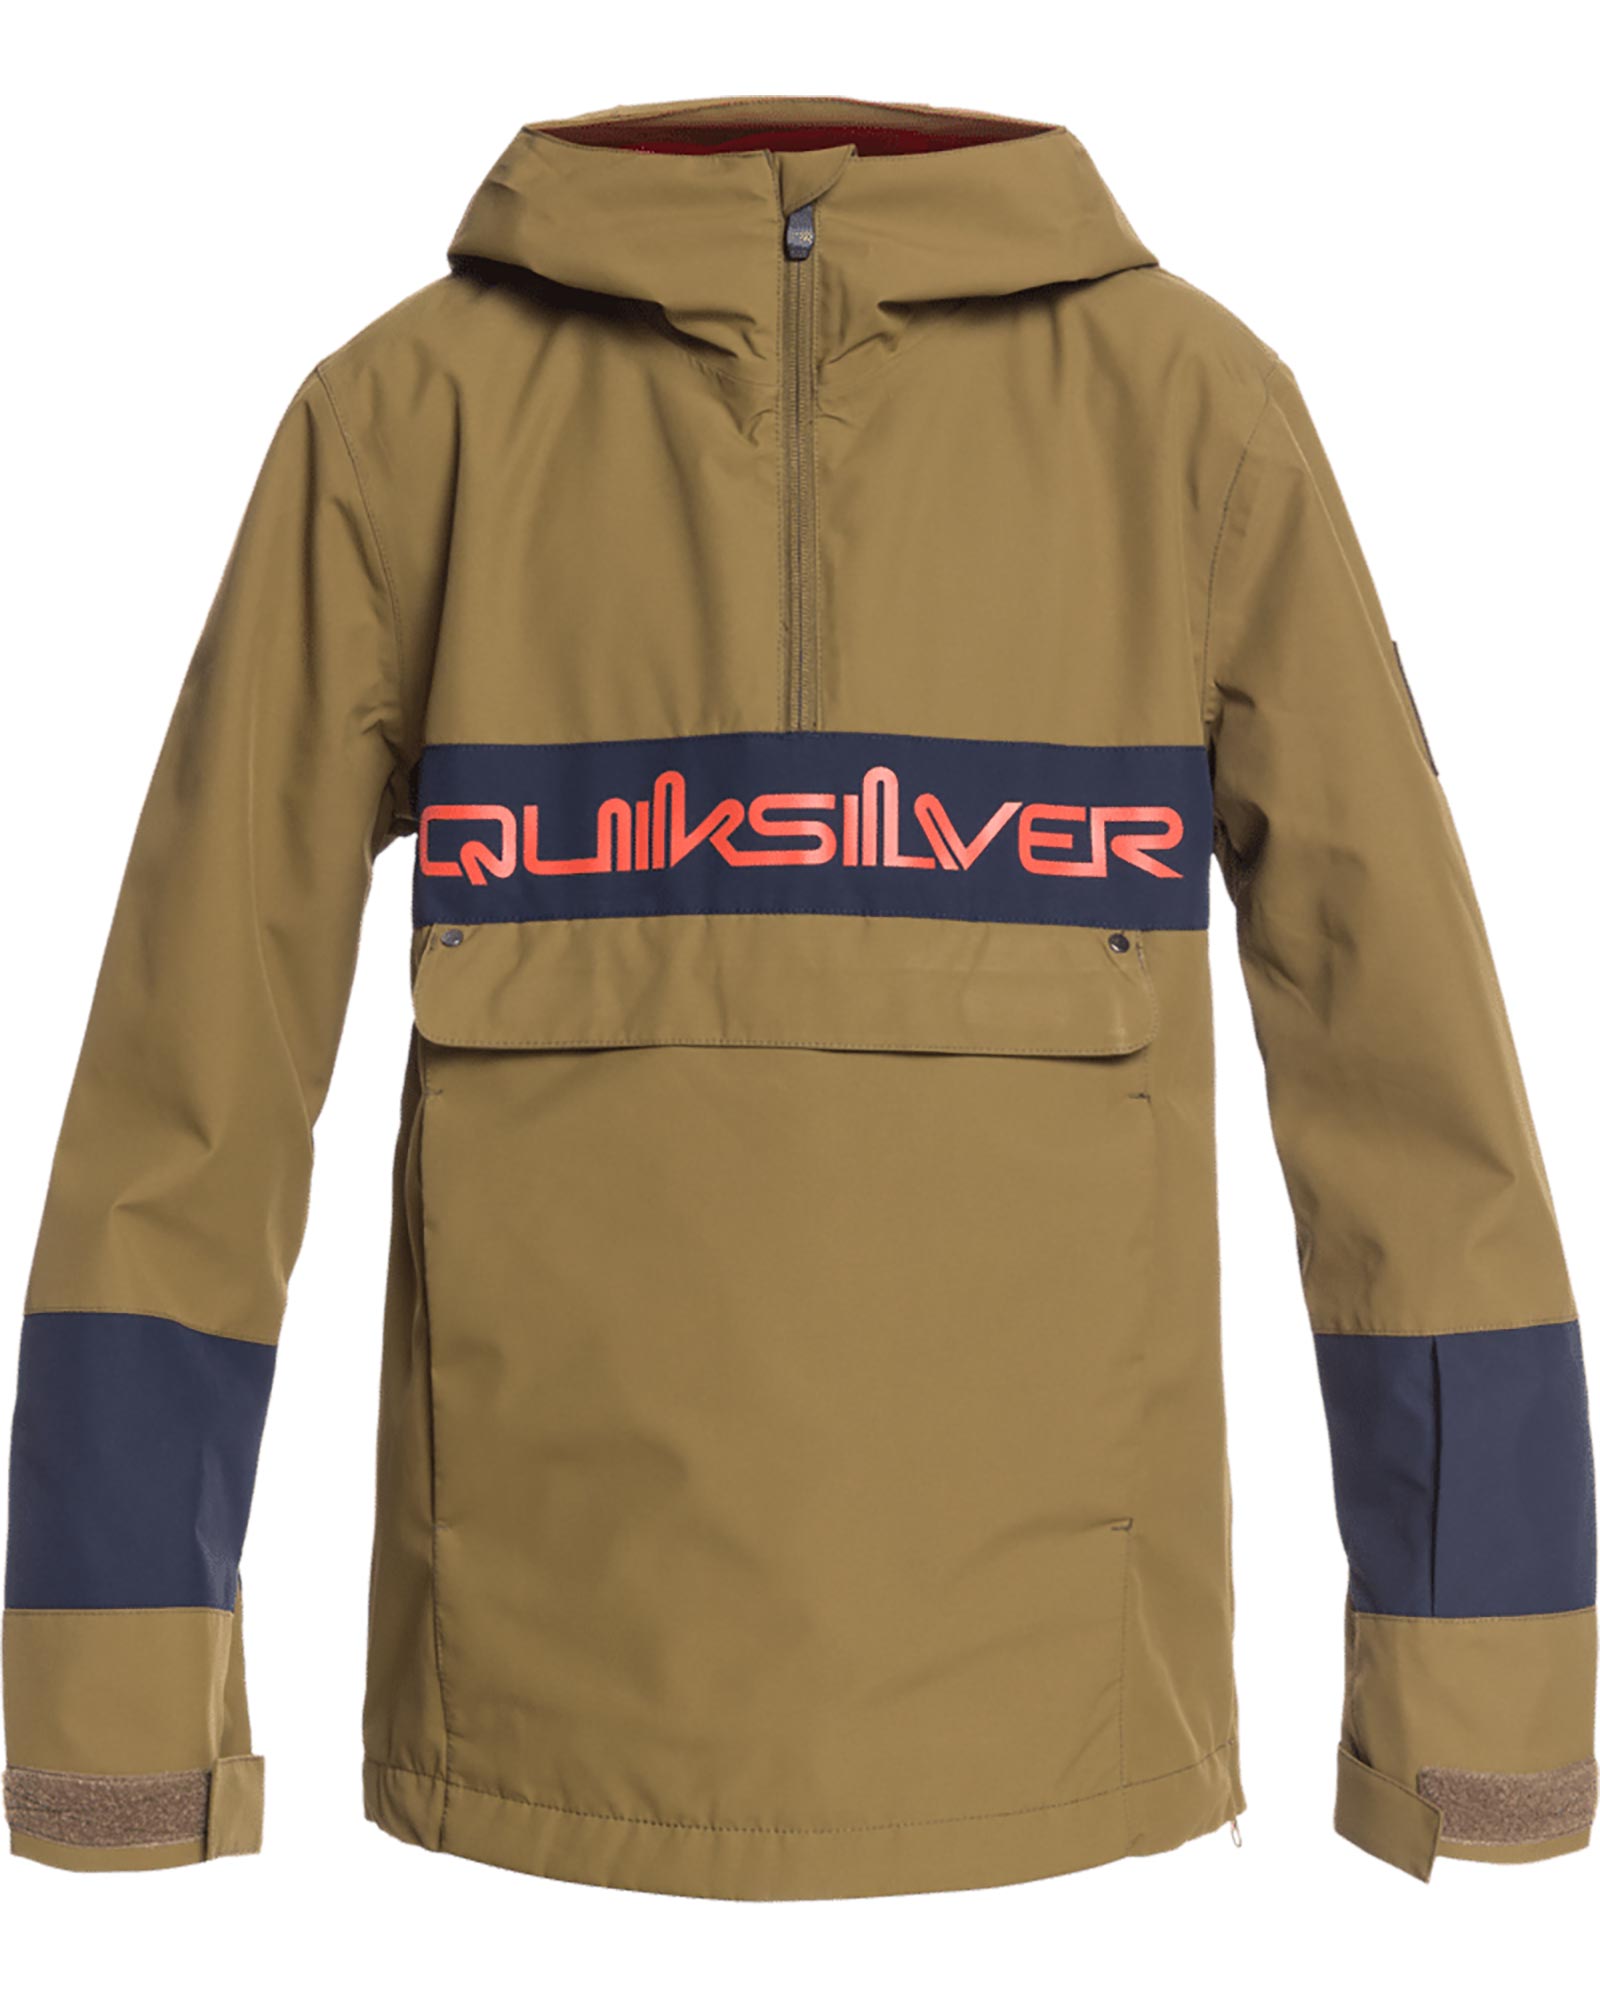 Product image of Quiksilver Steeze Boys' Jacket